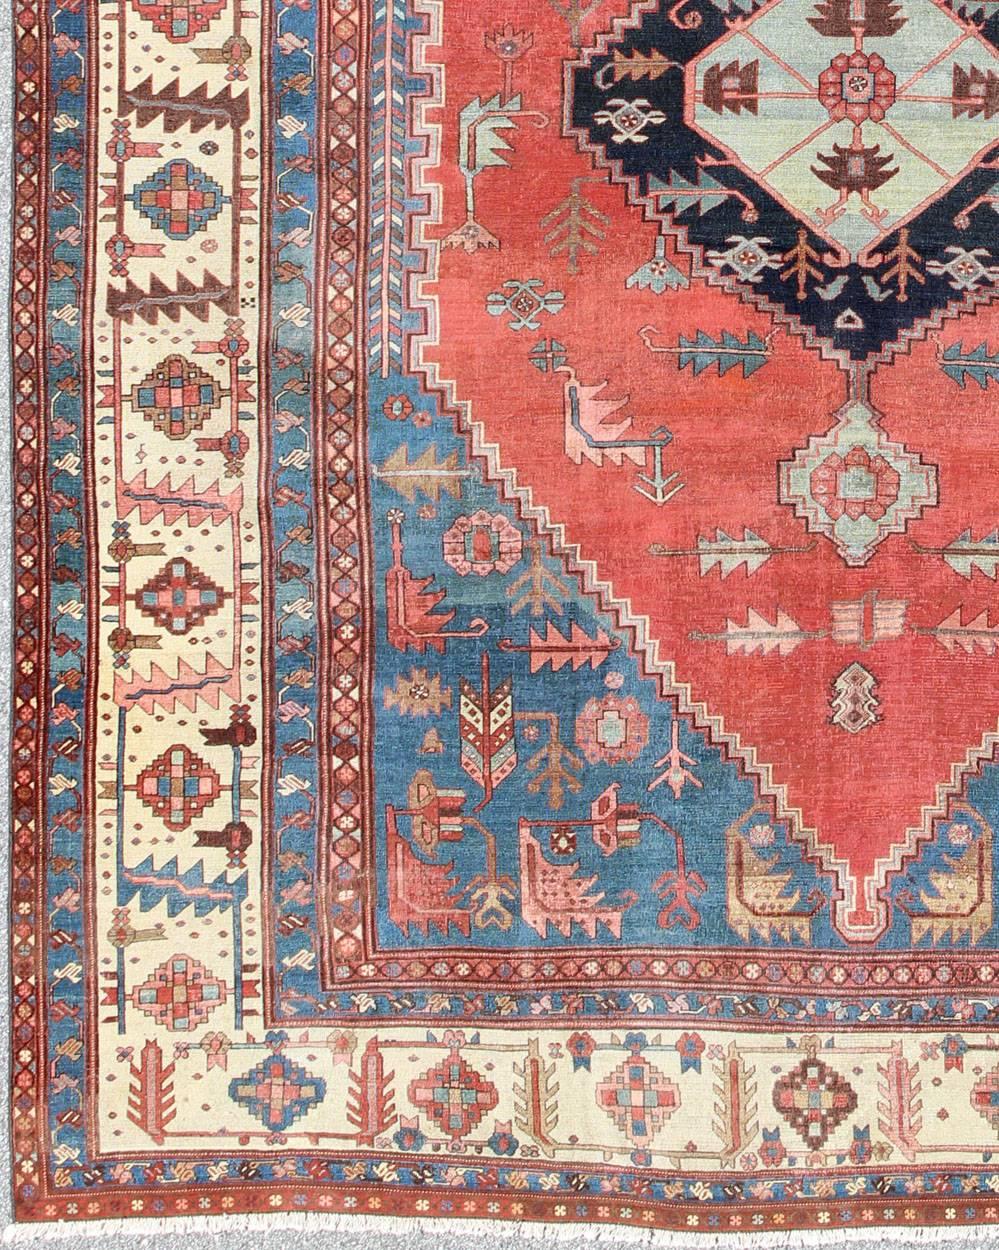 Antique Persian large Bakshaish Serapi rug in brick red, royal blue and ivory. Keivan Woven Arts / rug L11-0608, country of origin / type: Iran / Bakshaish Serapi, circa 1880.
Measures: 11'7 x 15'2.
Crafted in the Azarbijan district of northwest